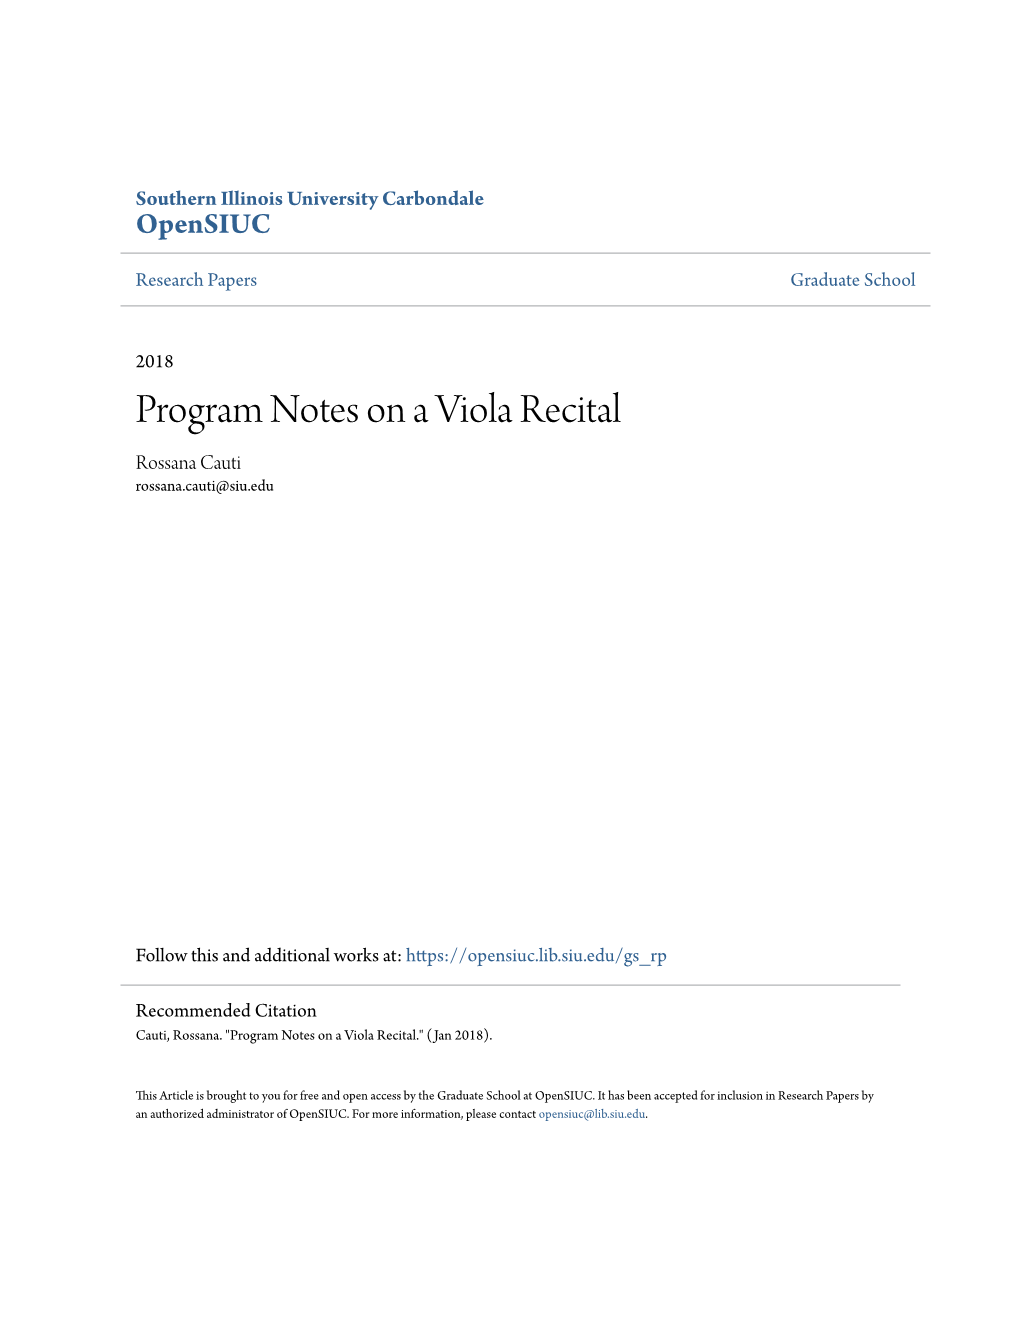 Program Notes on a Viola Recital Rossana Cauti Rossana.Cauti@Siu.Edu